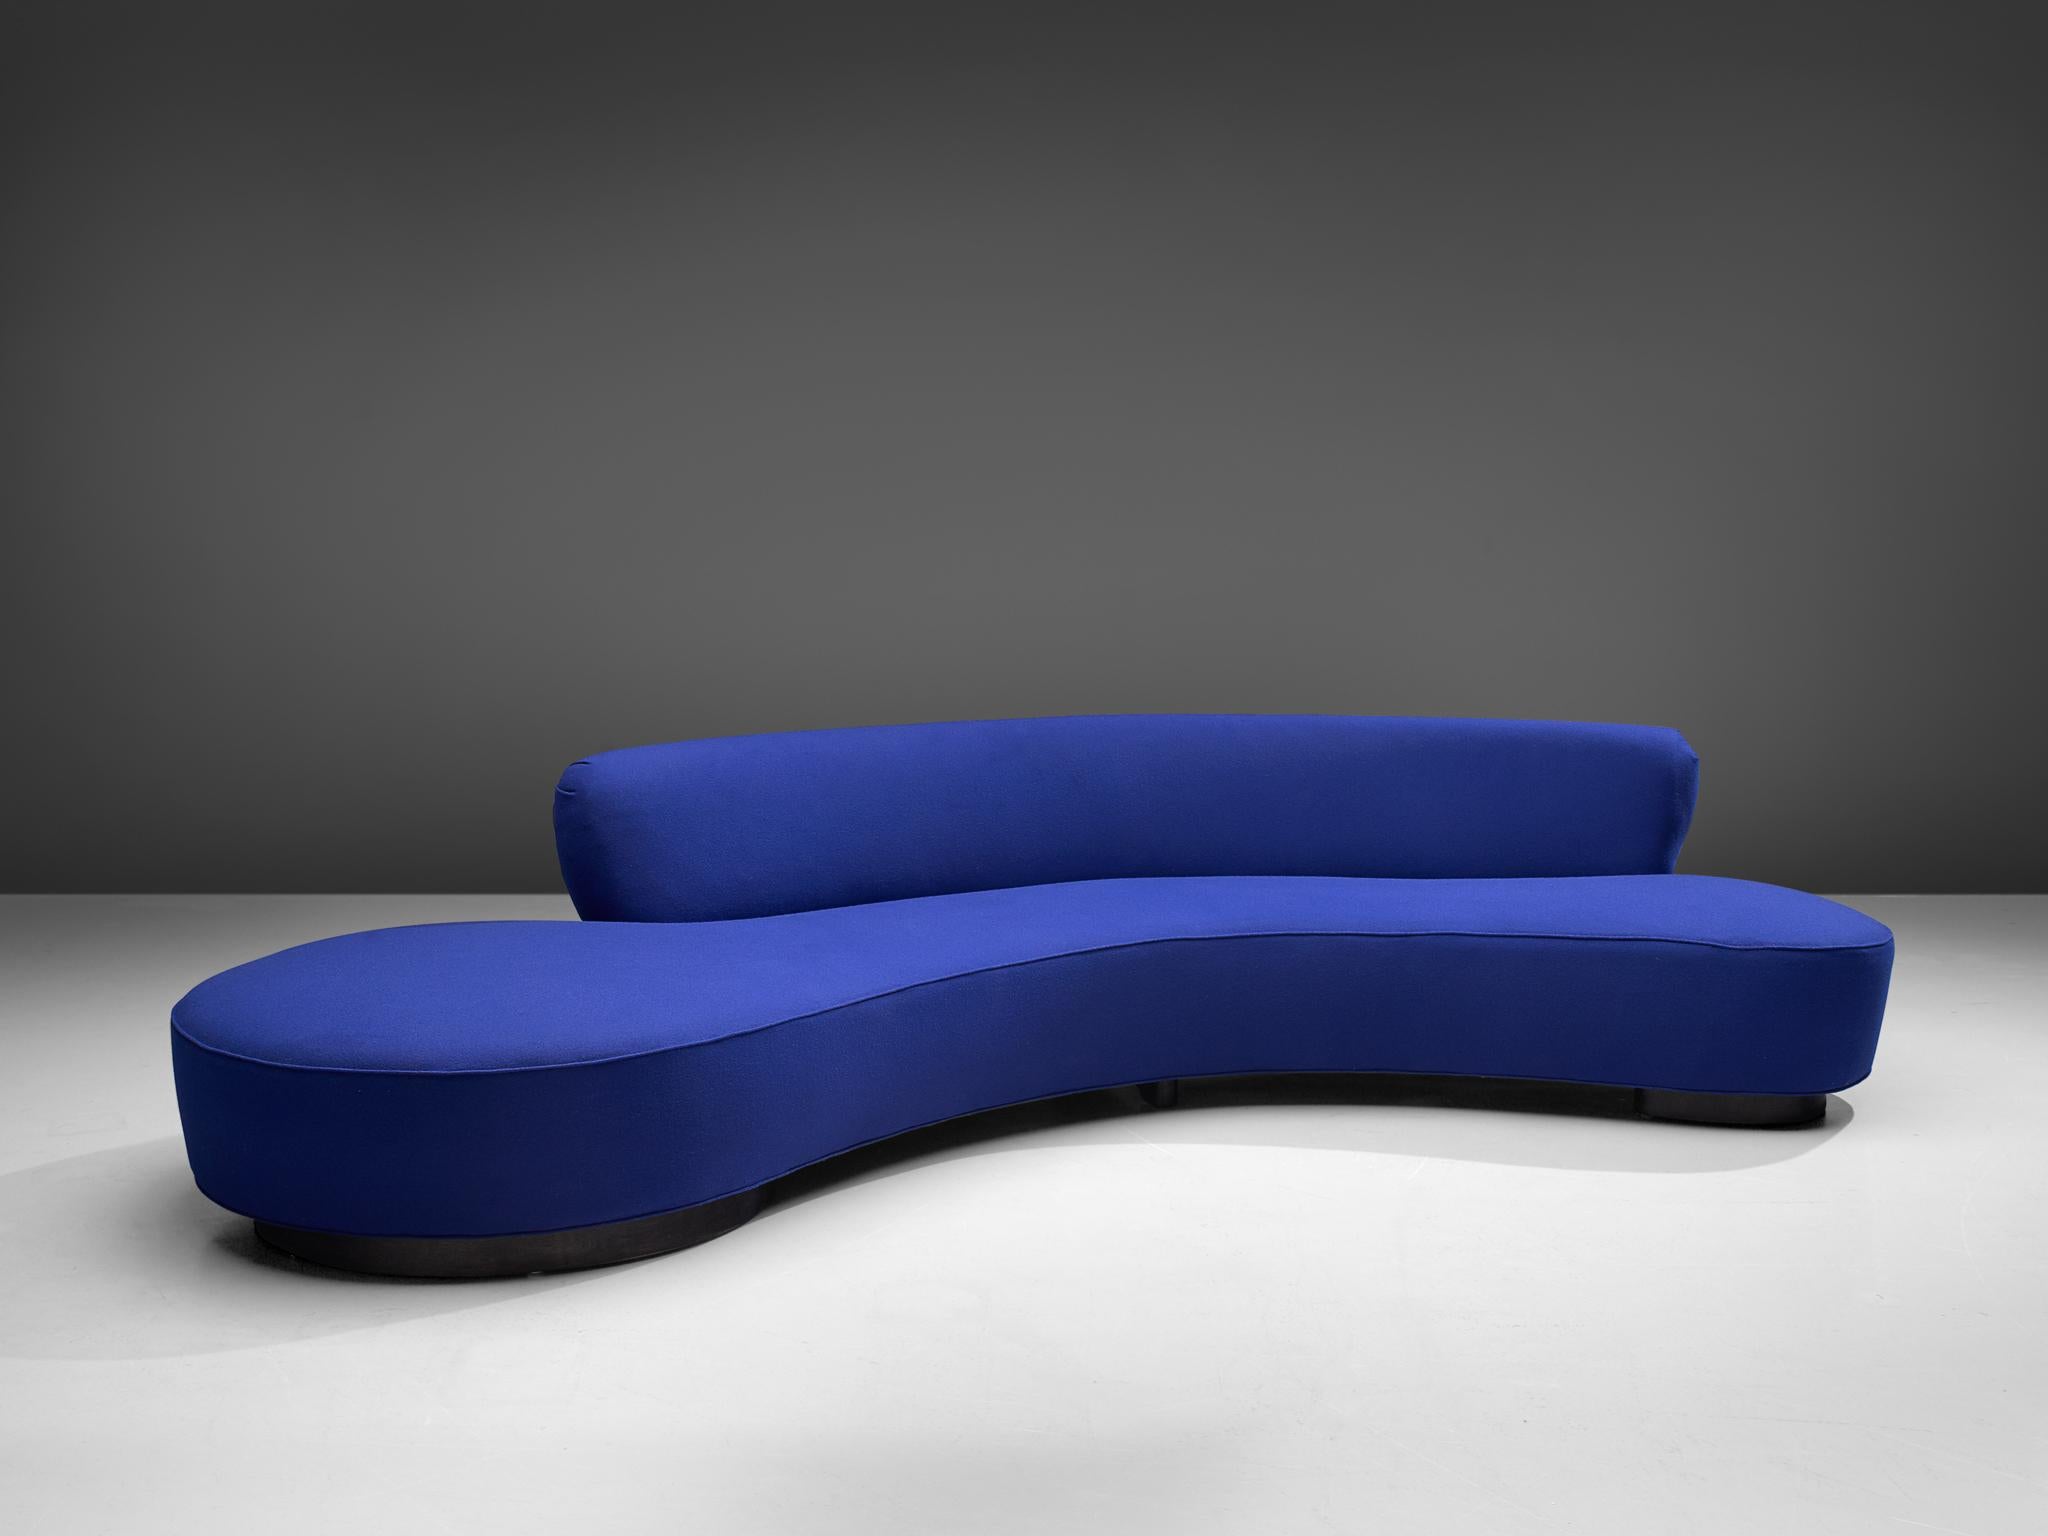 Mid-Century Modern Vladimir Kagan, 'Serpentine' Sofa, Blue Fabric and Wood, Usa, Design, 1950s